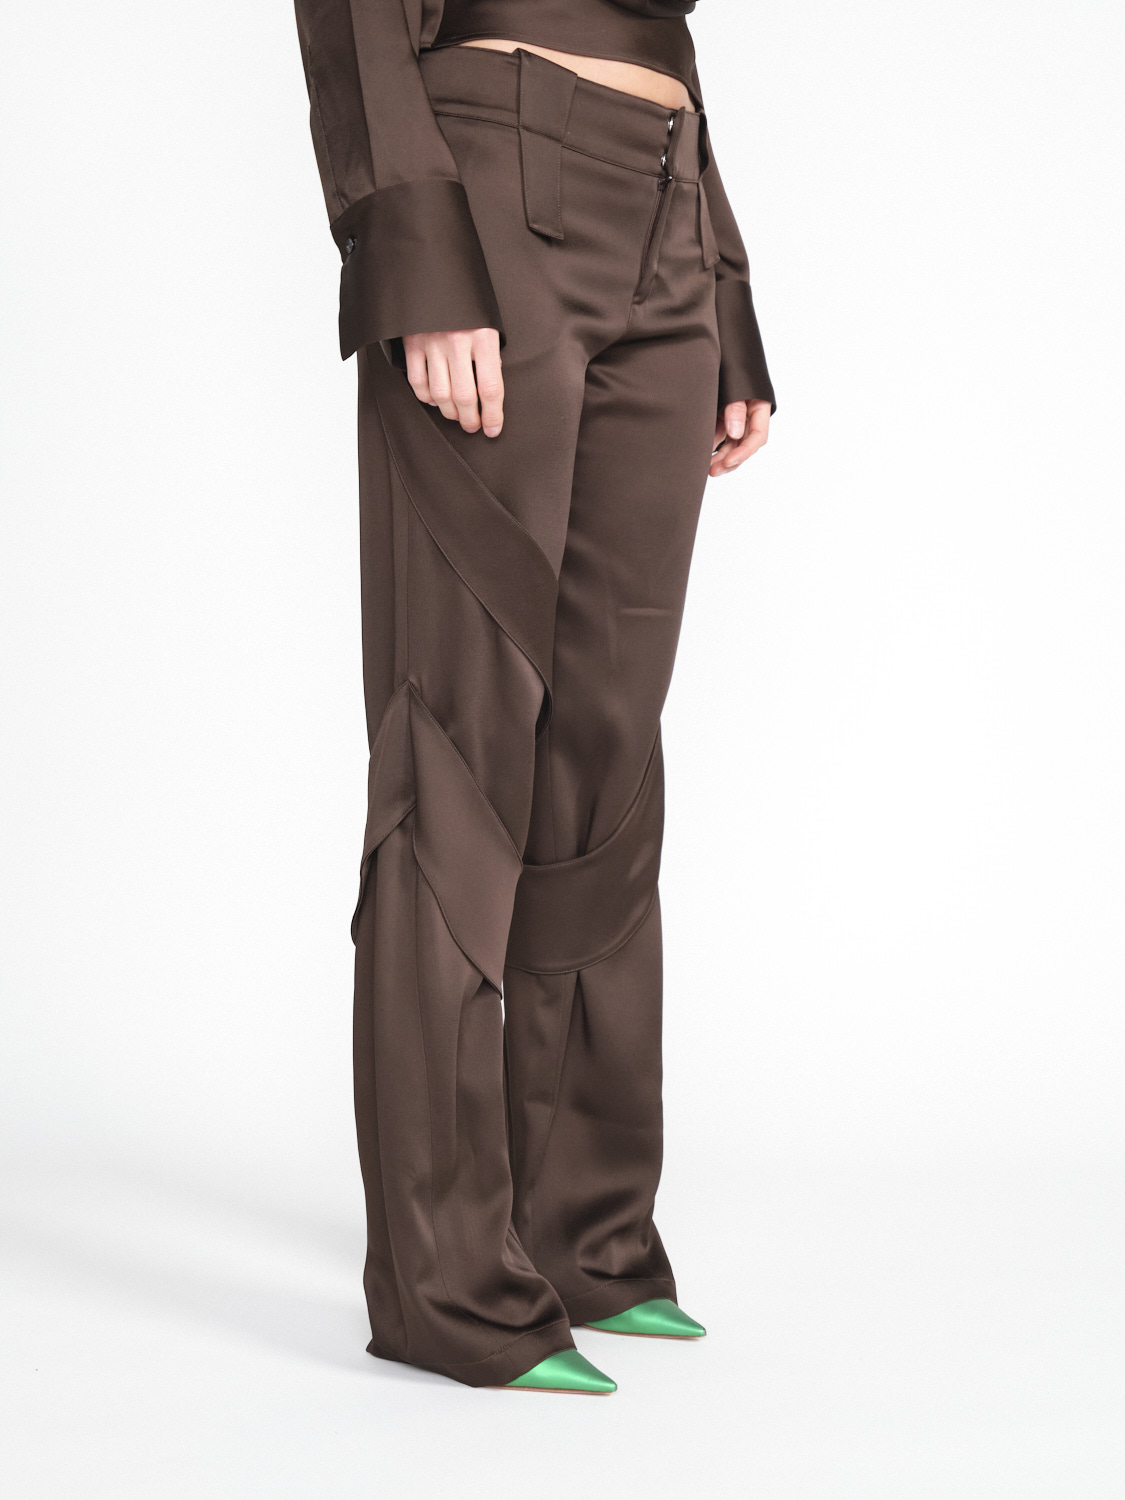 Blumarine Satin pants with layer details  brown 34